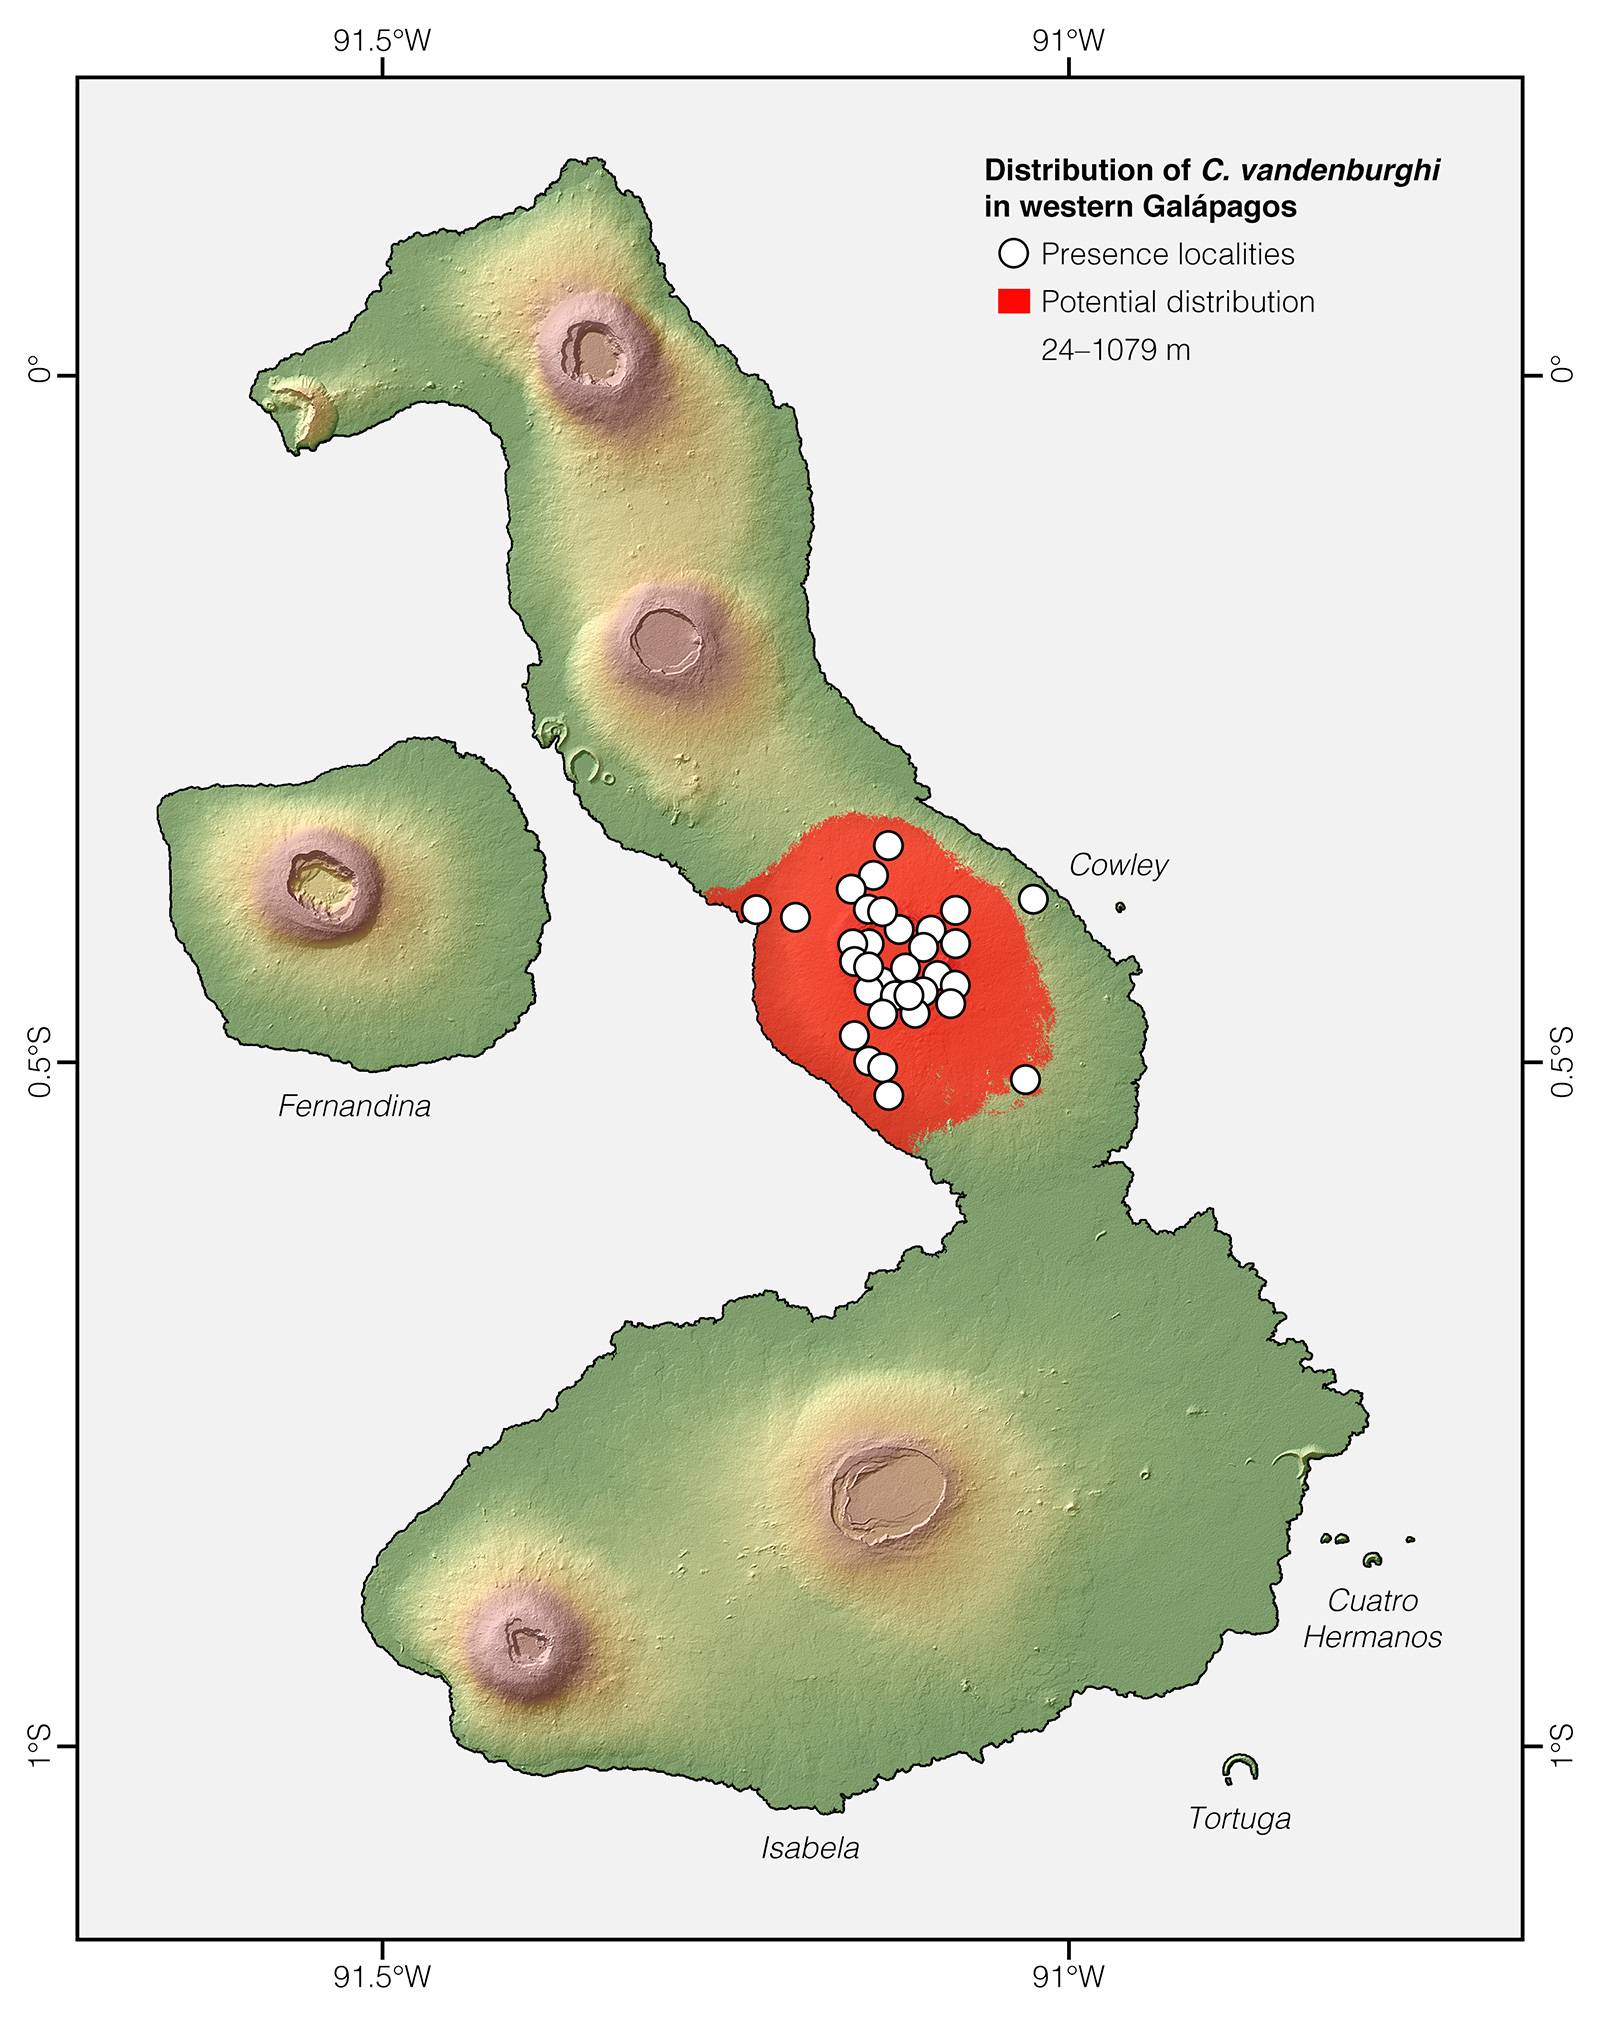 Distribution of Chelonoidis vandenburghi in western Galápagos